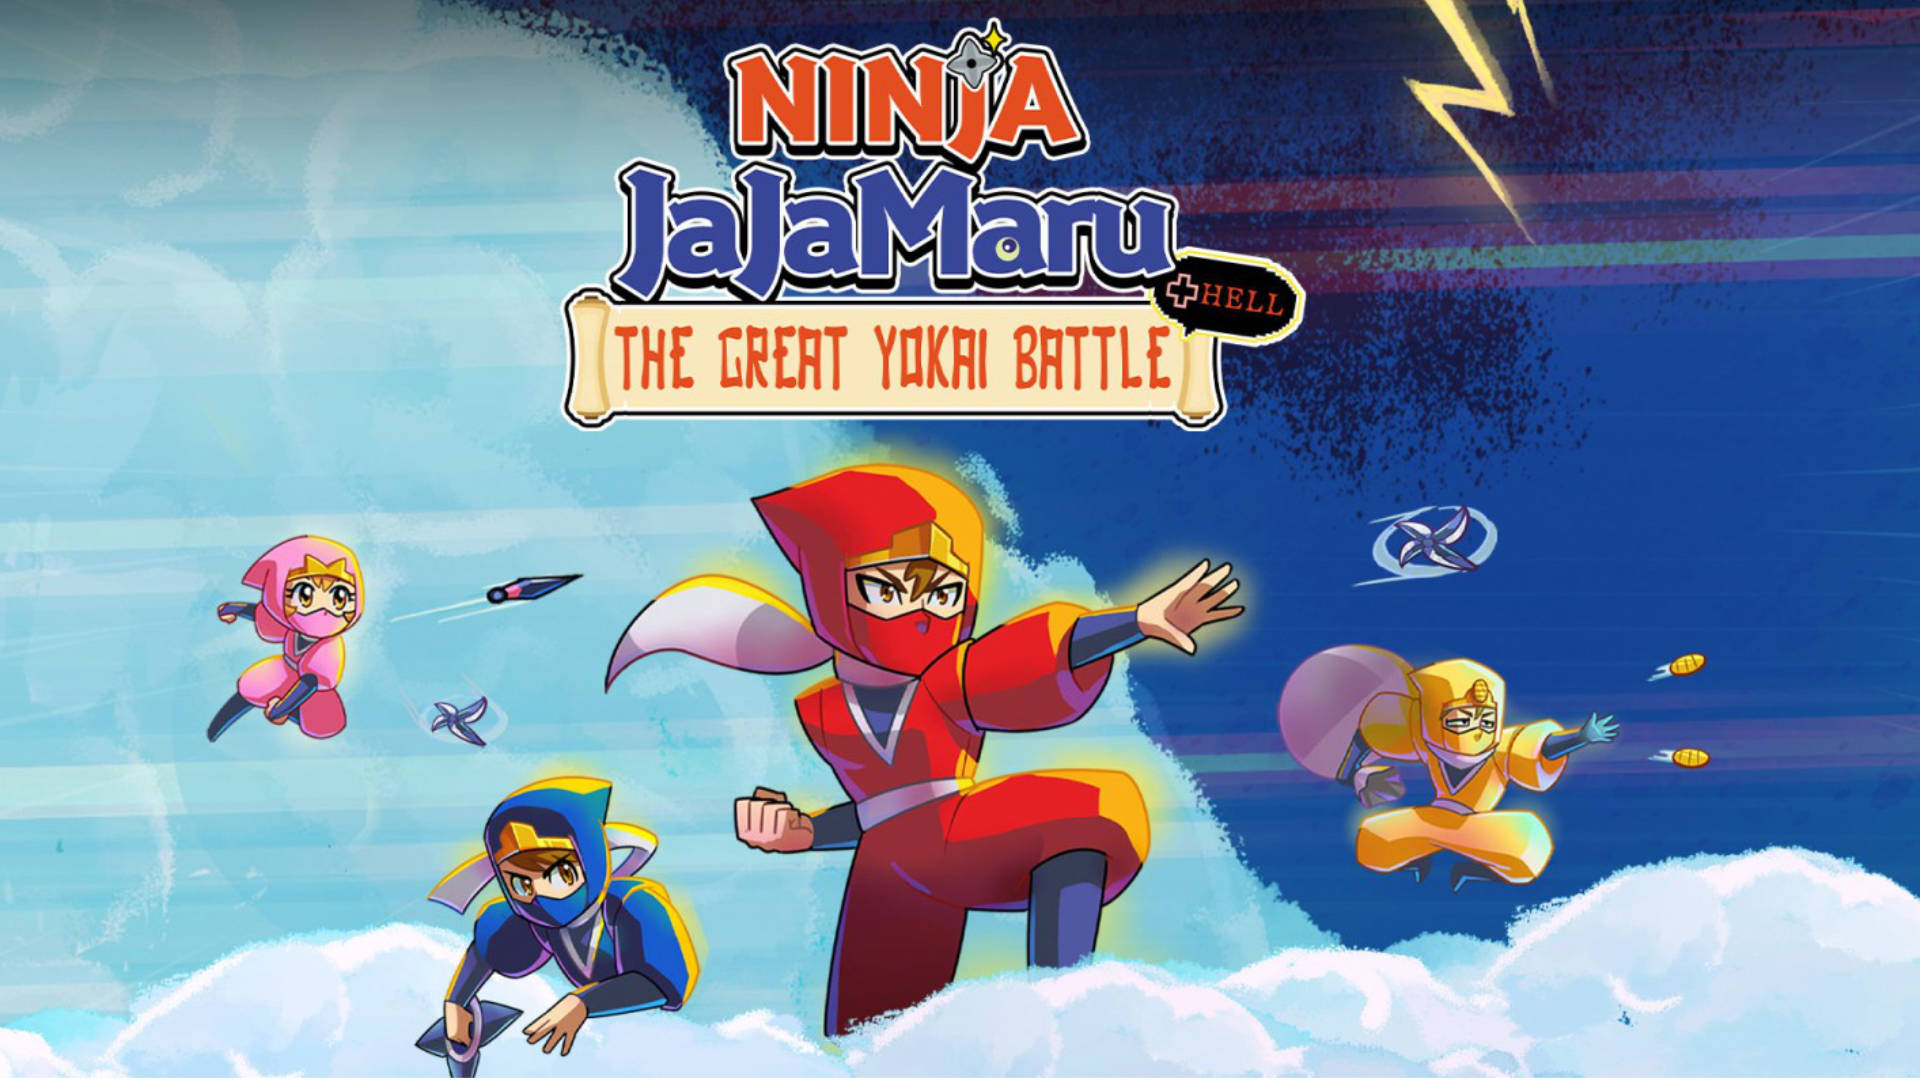 Ninja JaJaMaru The Great Yokai Battle + Hell Deluxe Edition – I want to be Ninja!